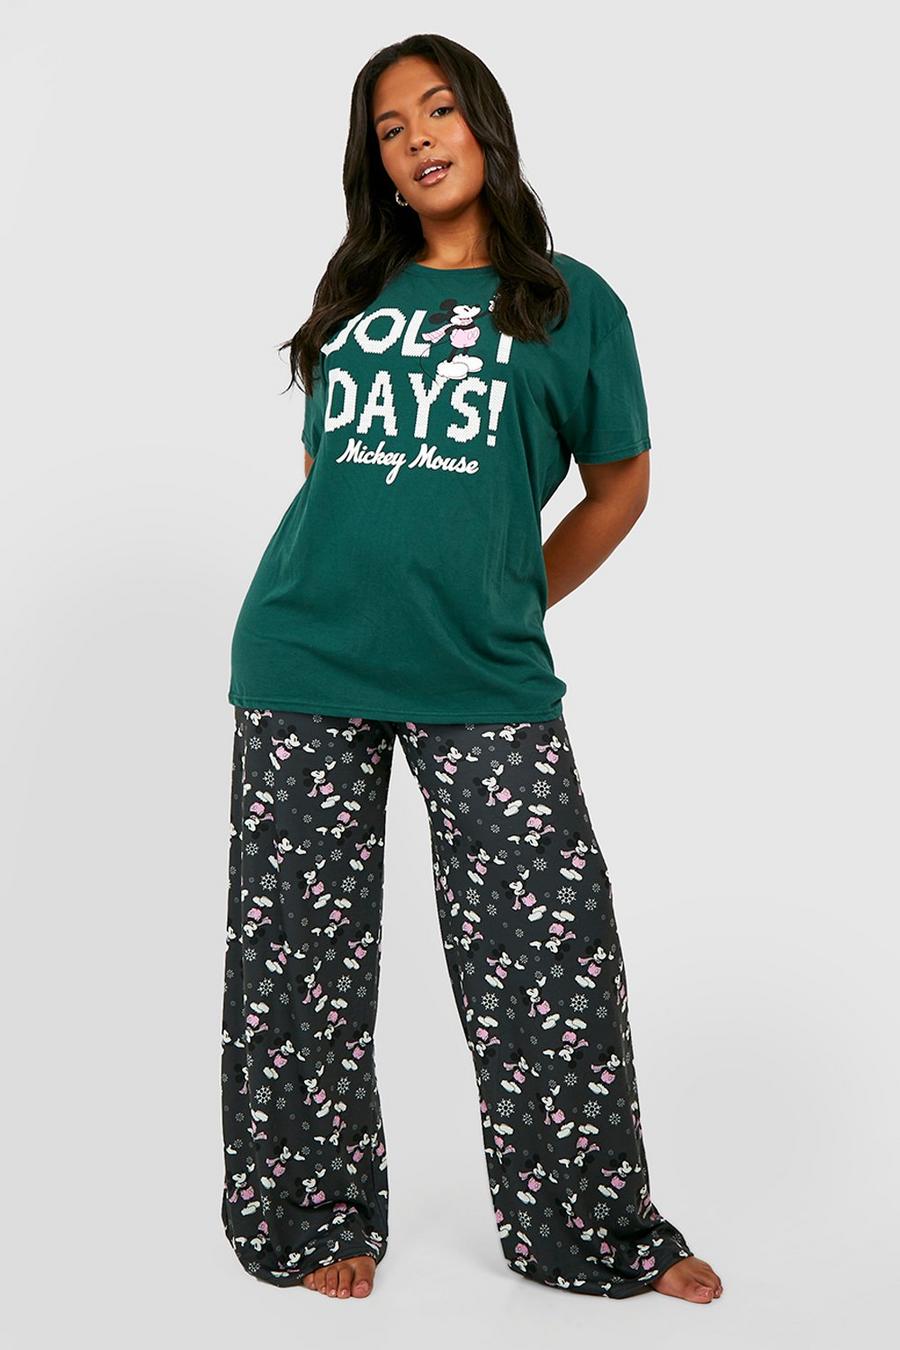 Pijama Plus navideño con estampado Jolly Days de Mickey Mouse, Green image number 1